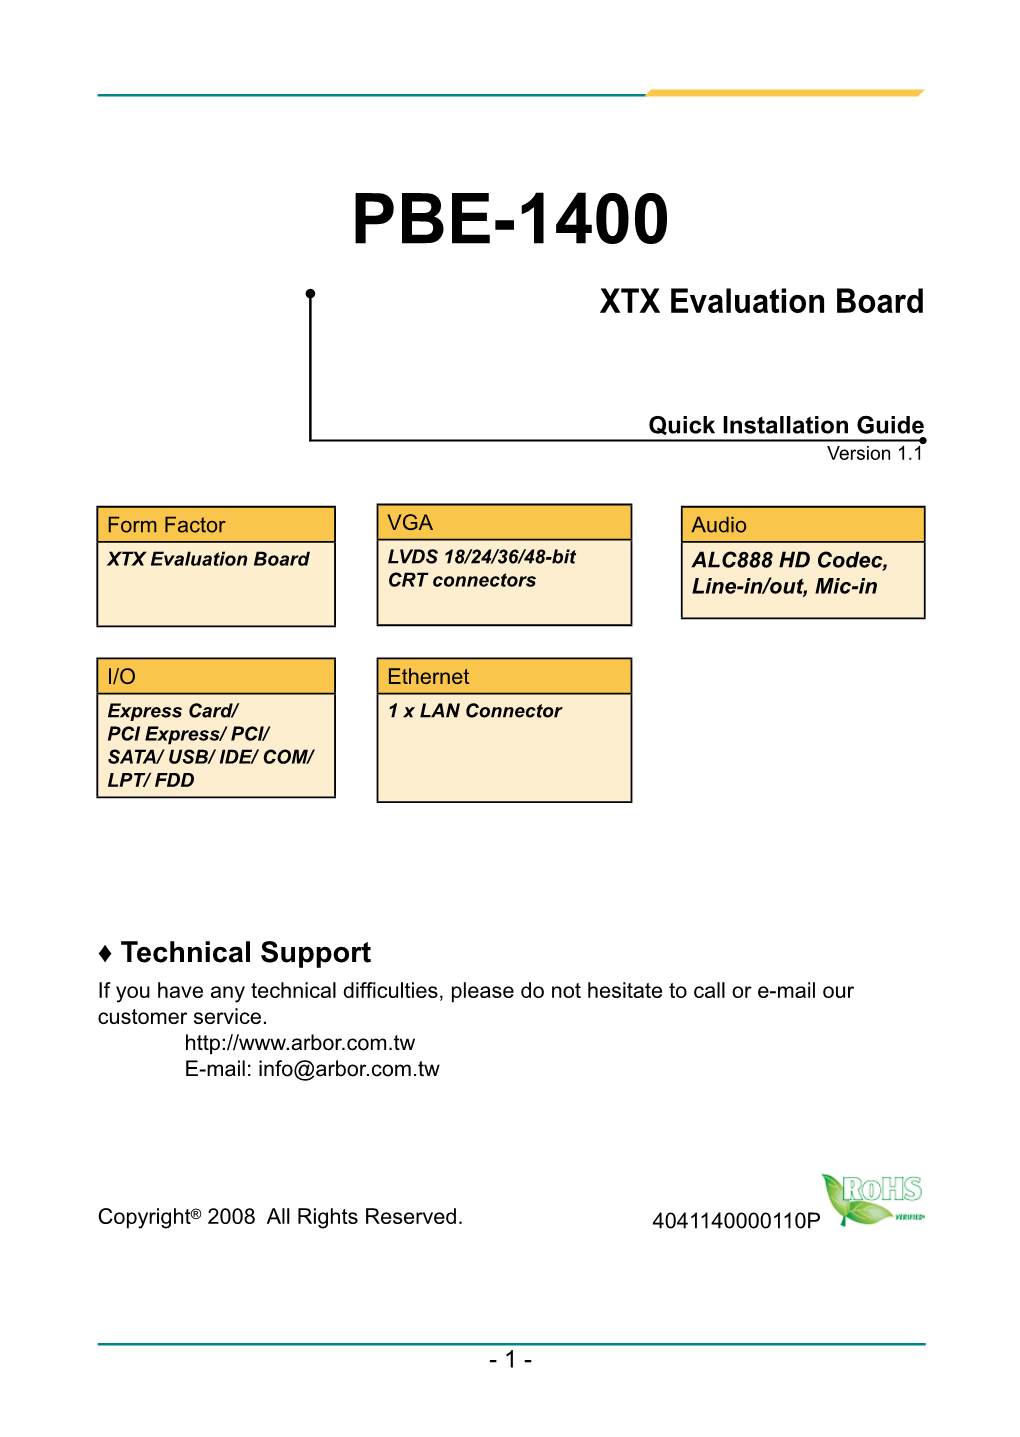 PBE-1400 XTX Evaluation Board